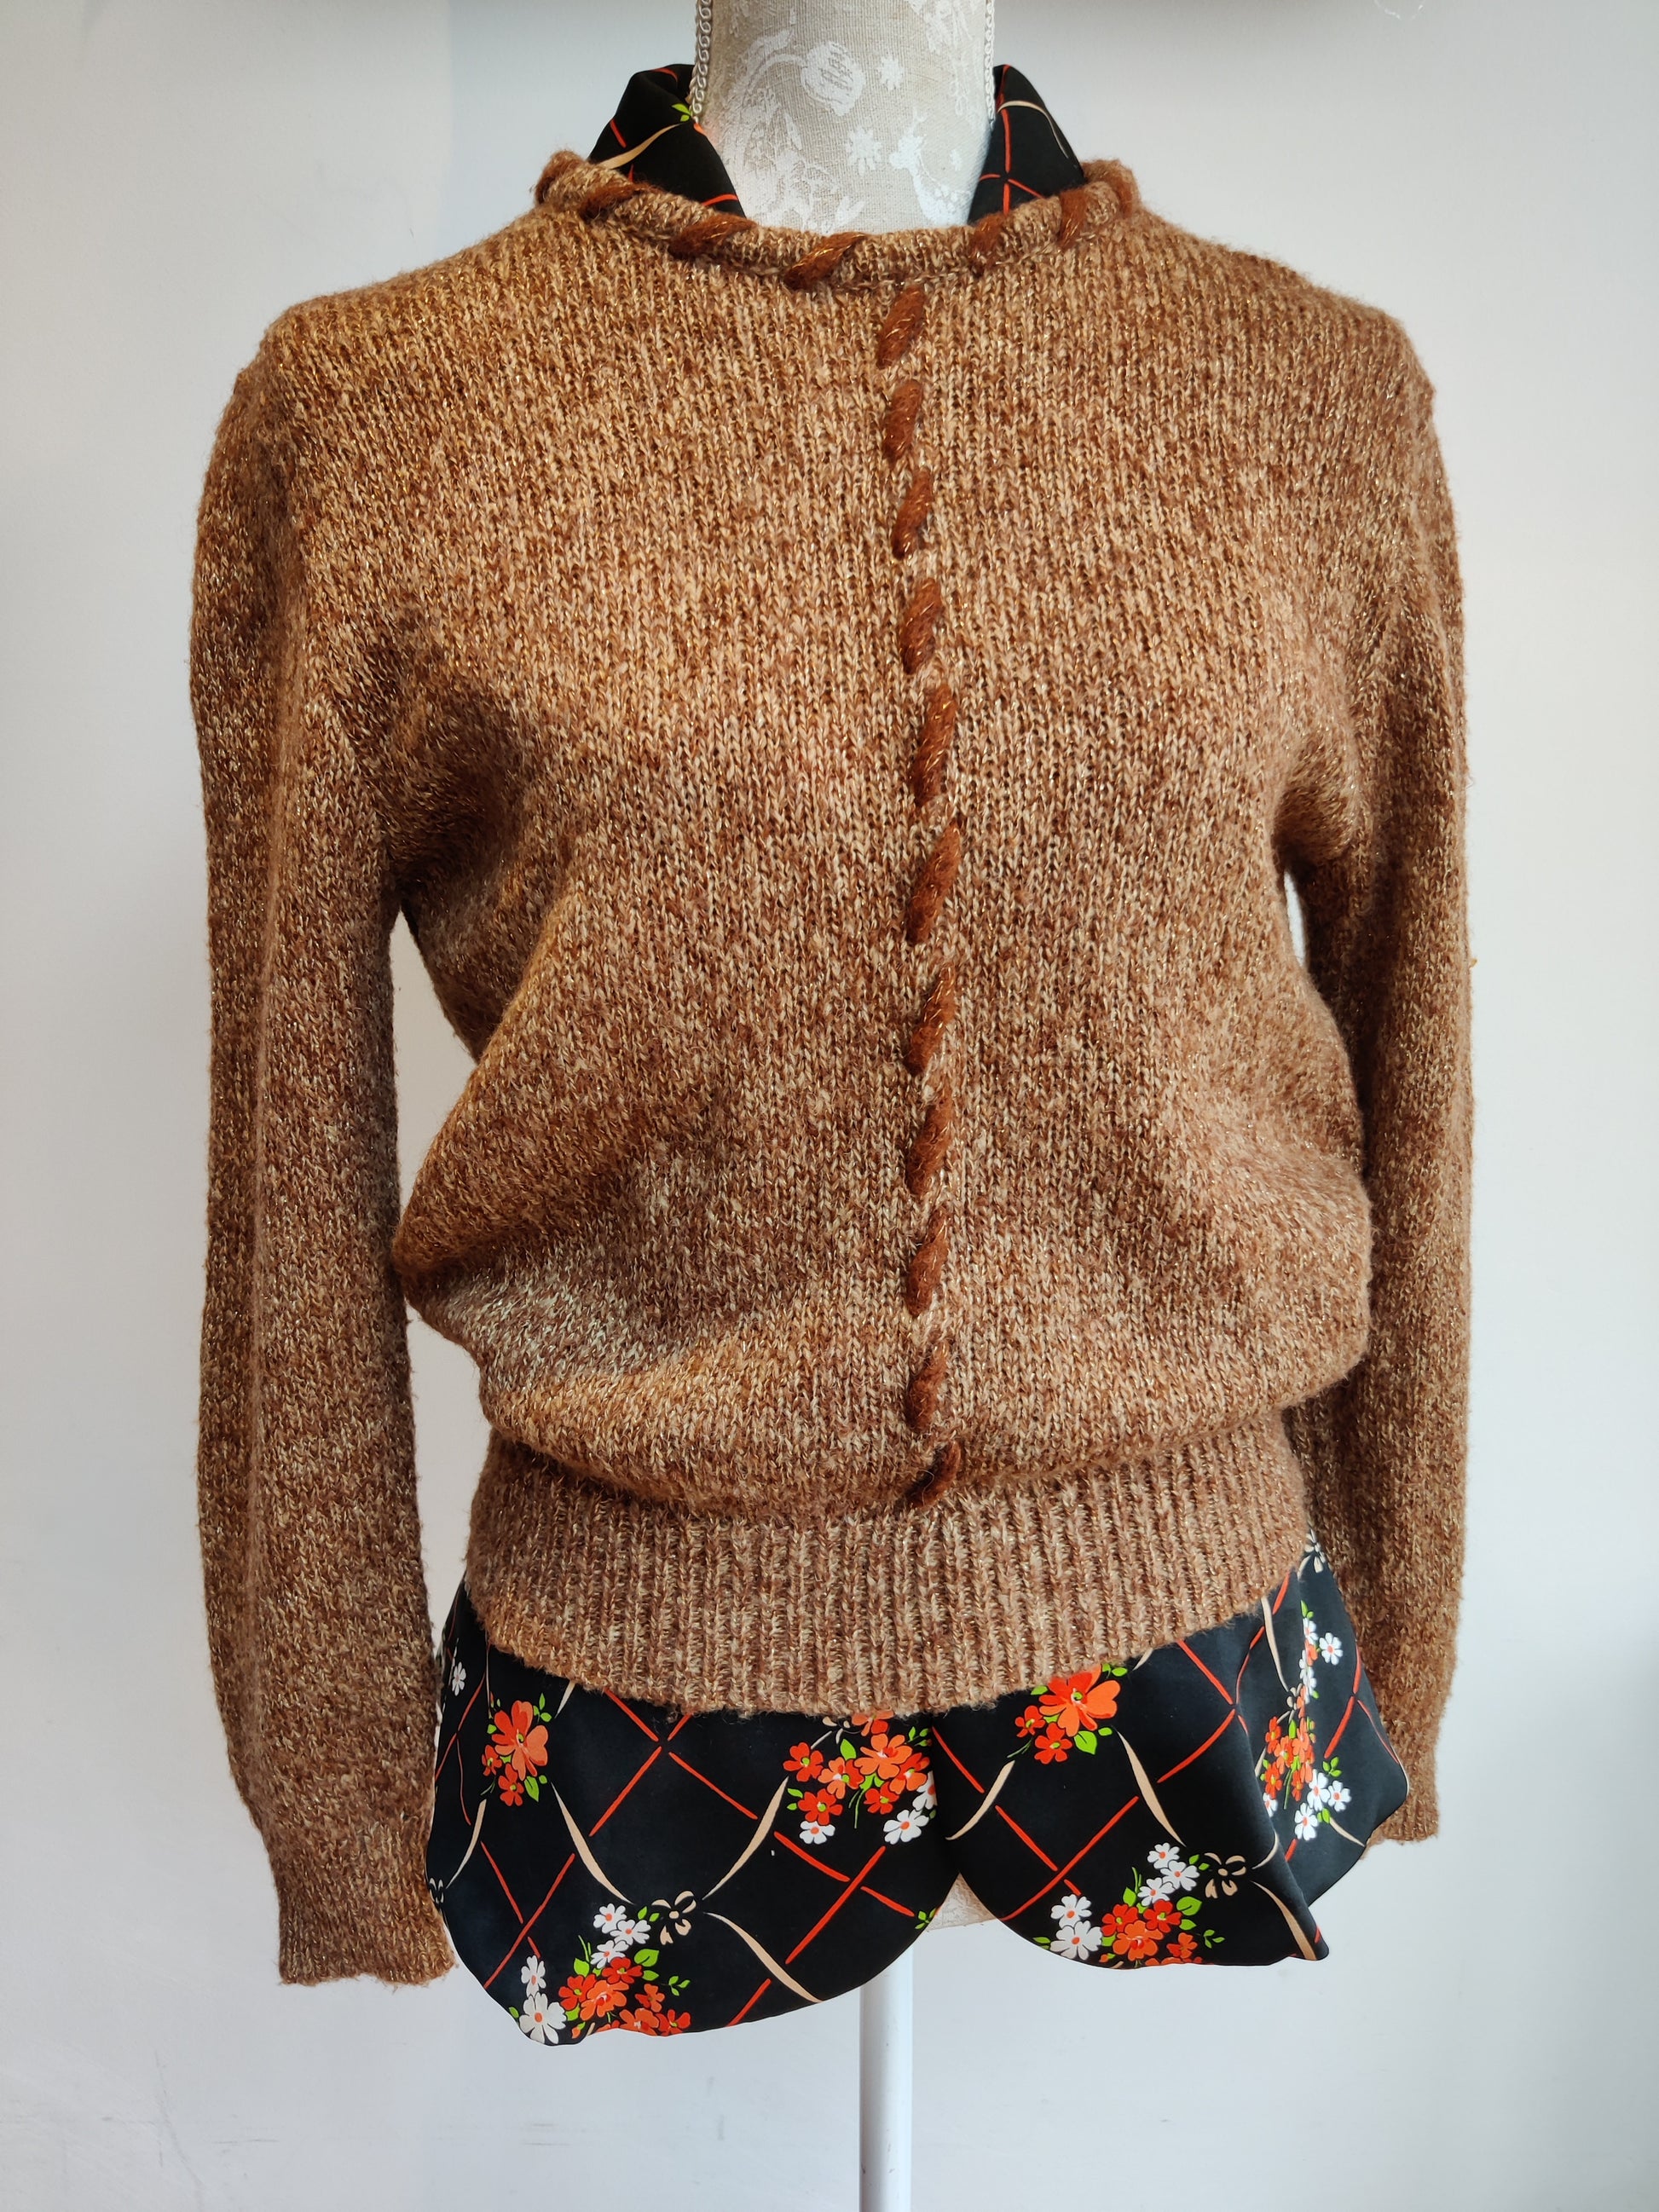 Stunning vintage knitted jumper by Windsmoor. Gold sparkle.